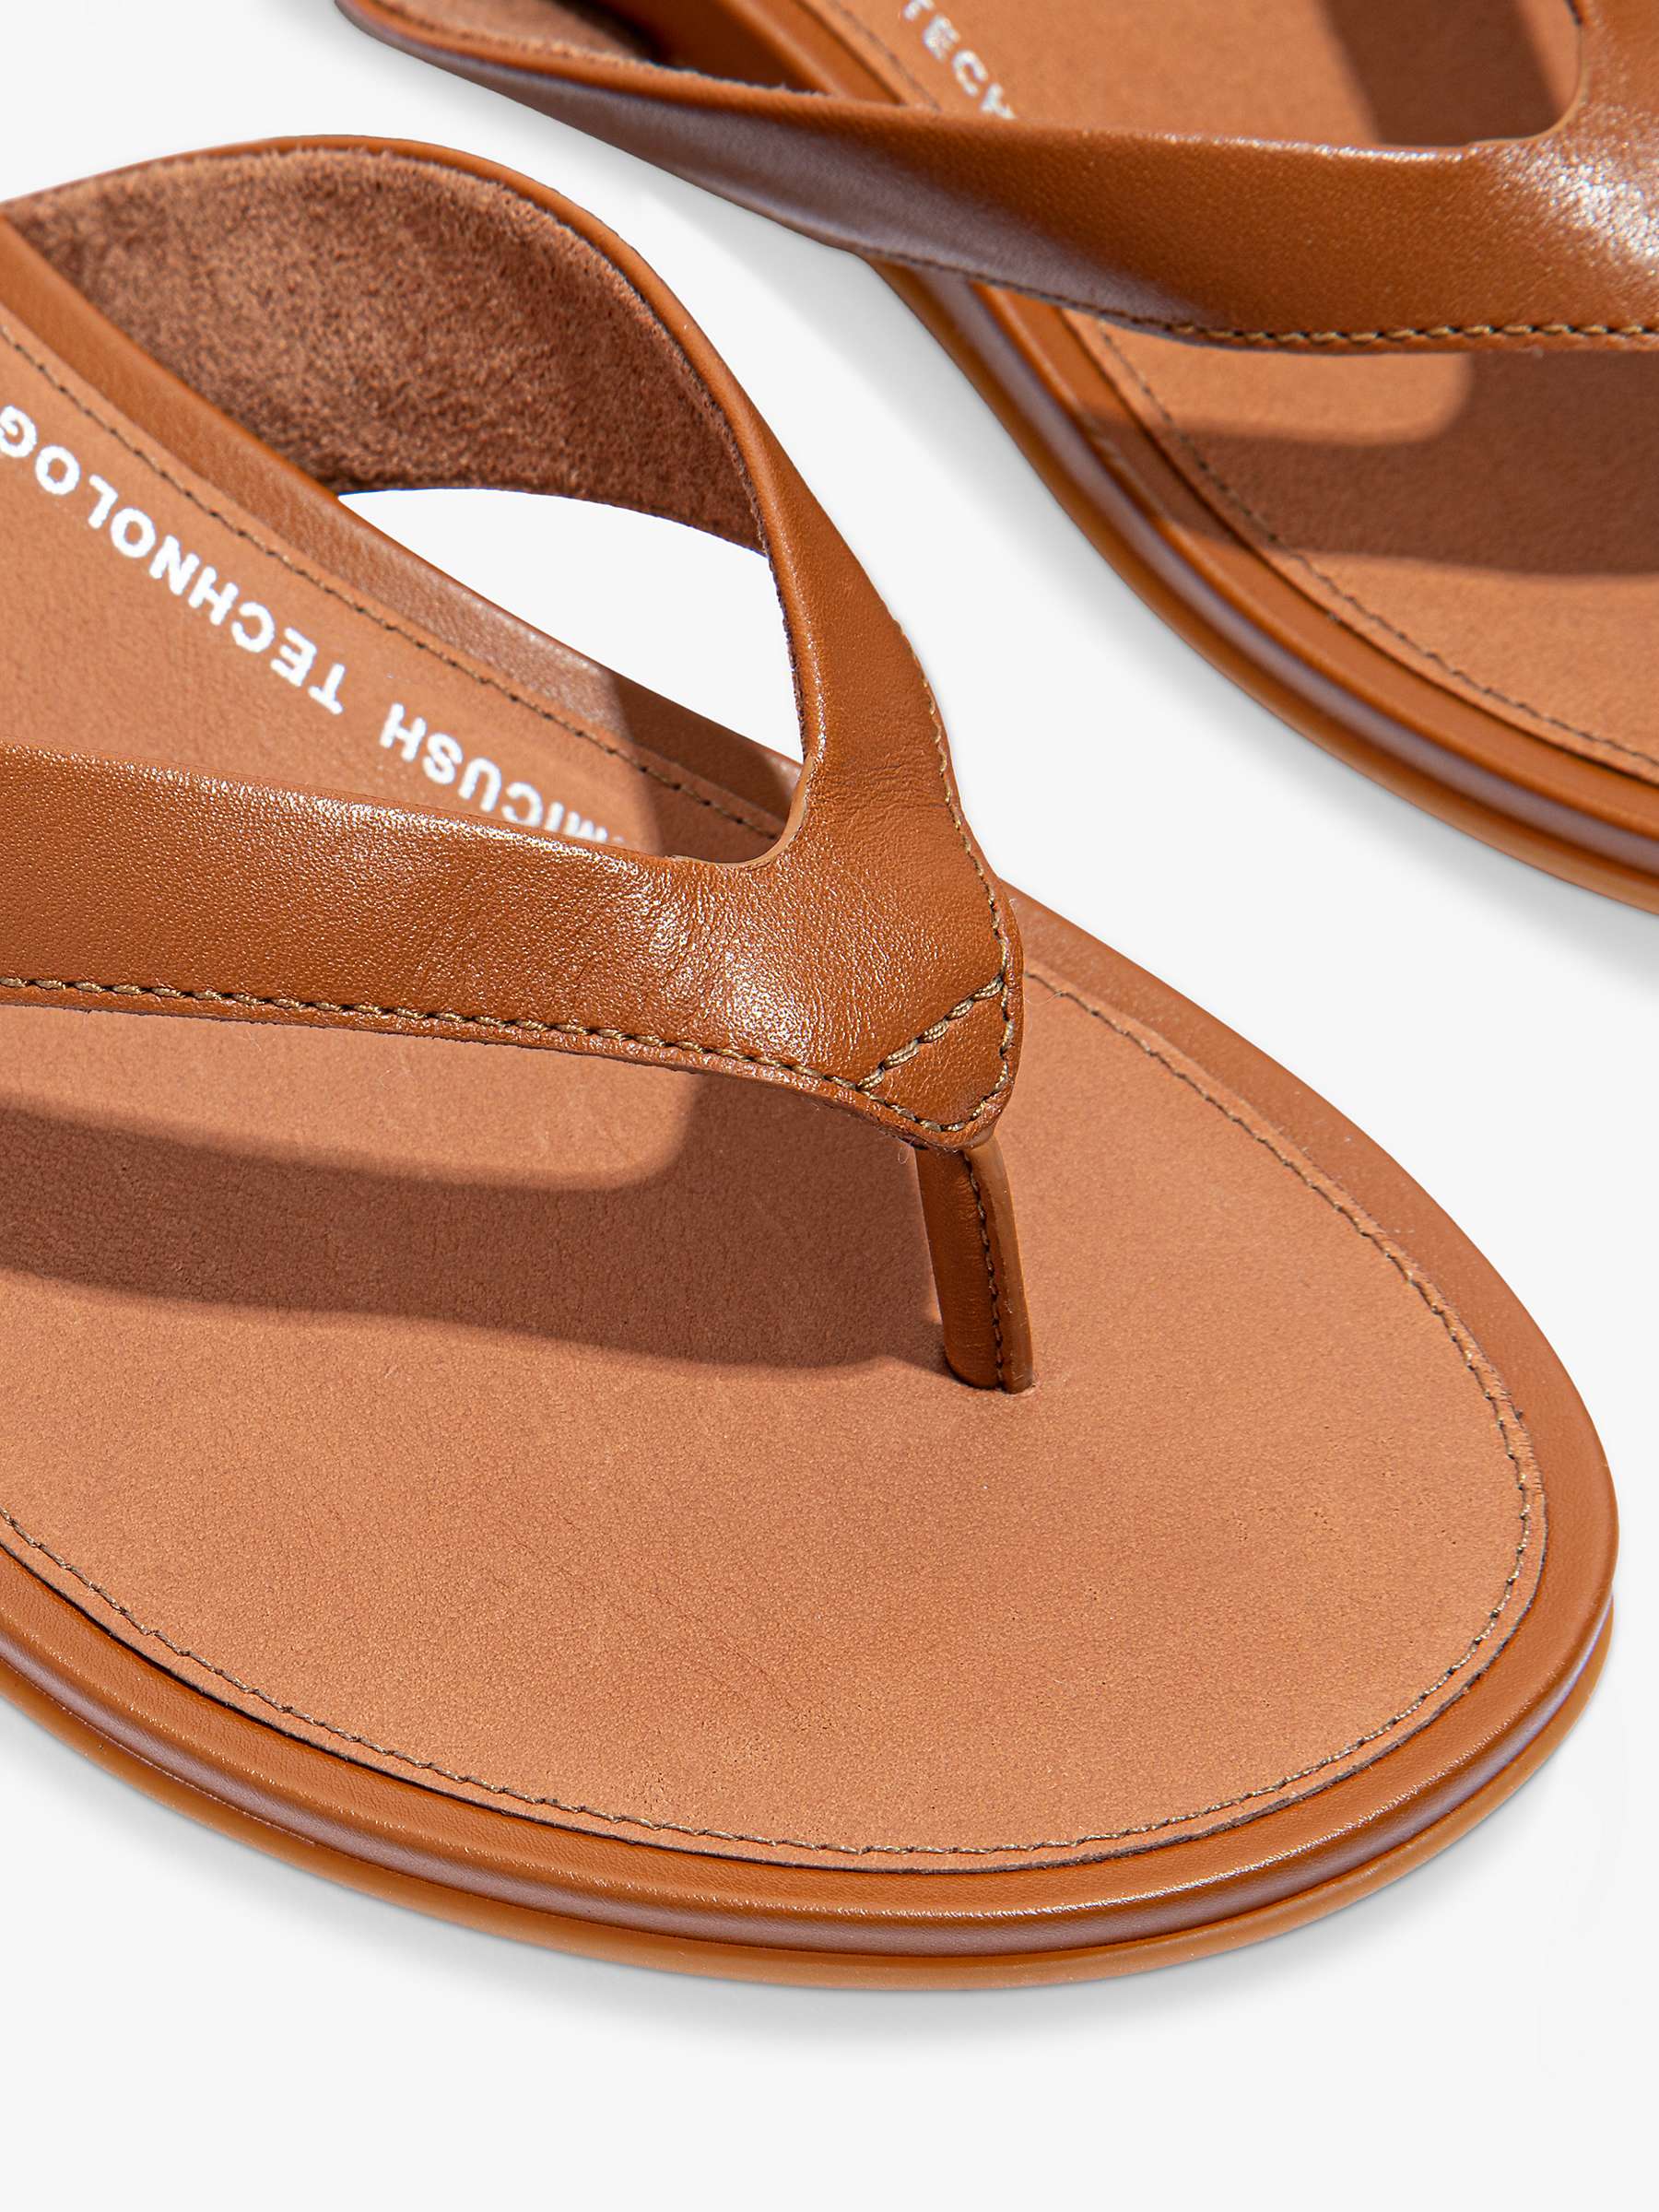 chanel leather flip flops size